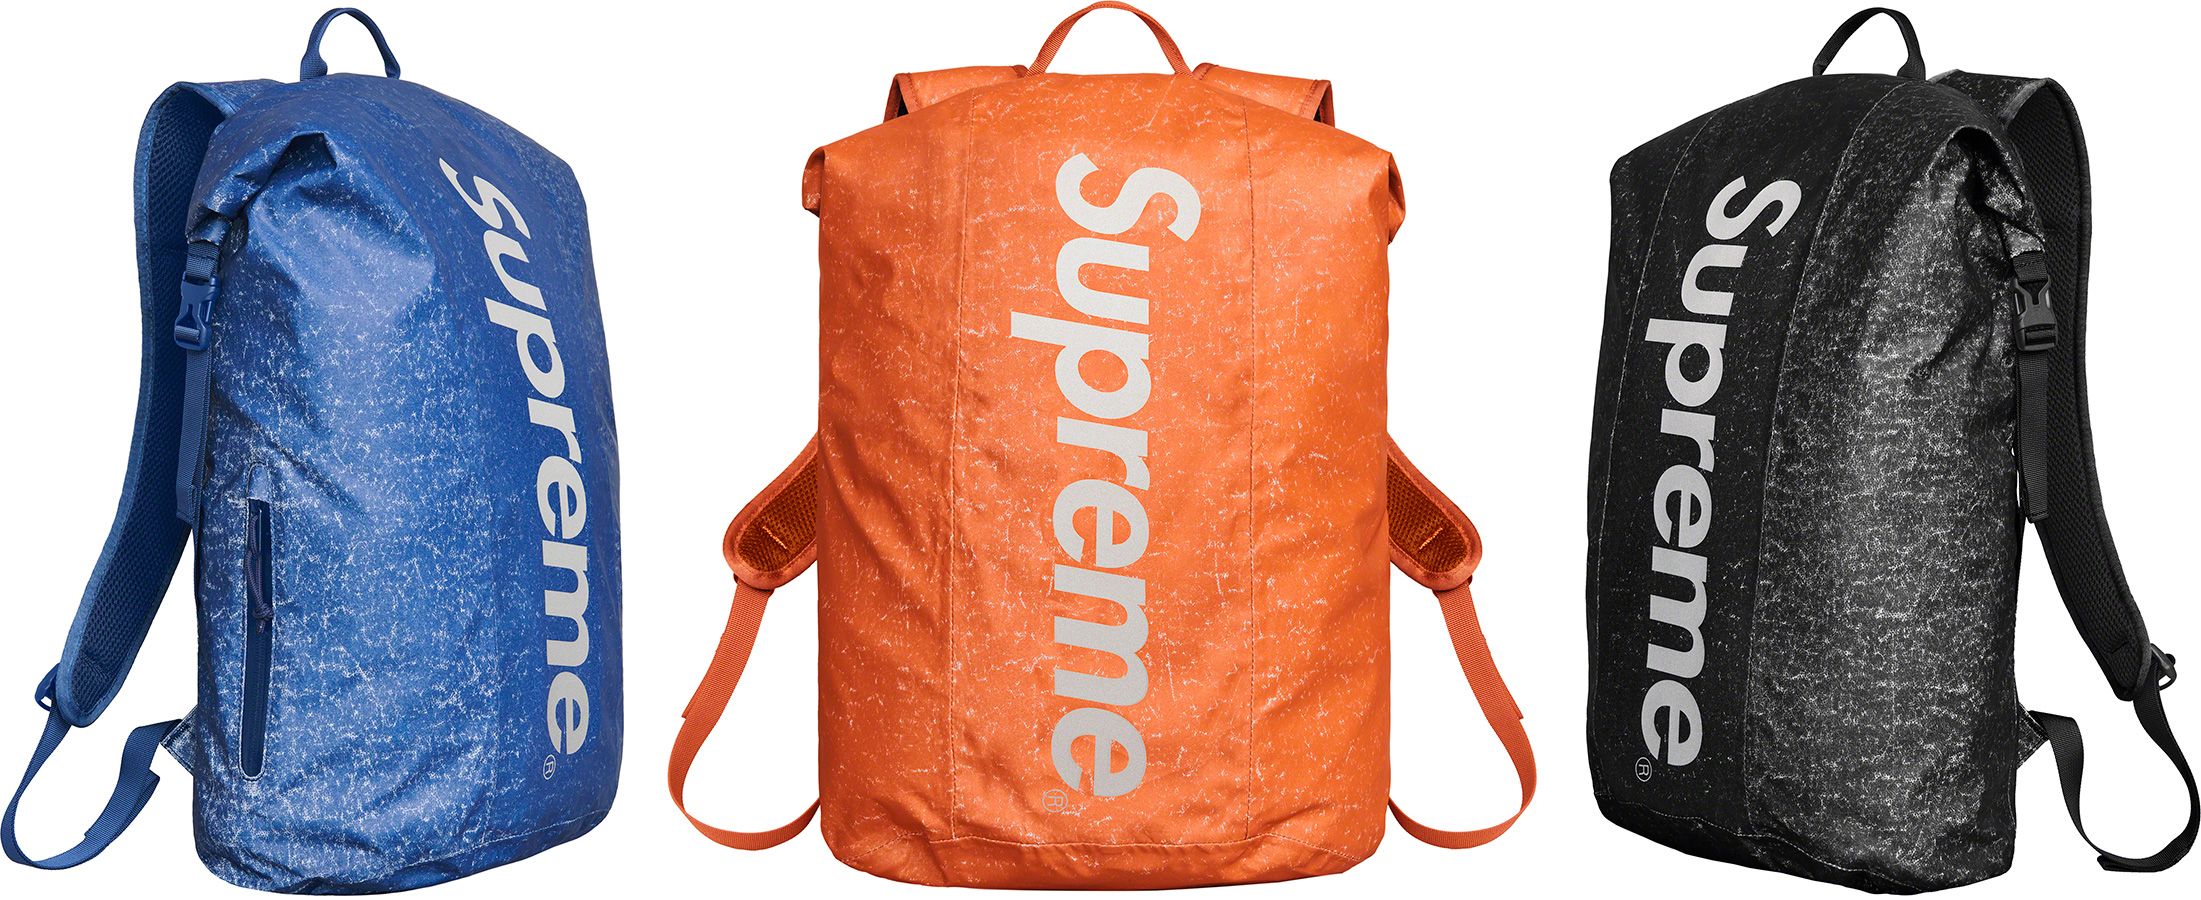 Supreme waterproof reflective backpack - www.mct.net.sa